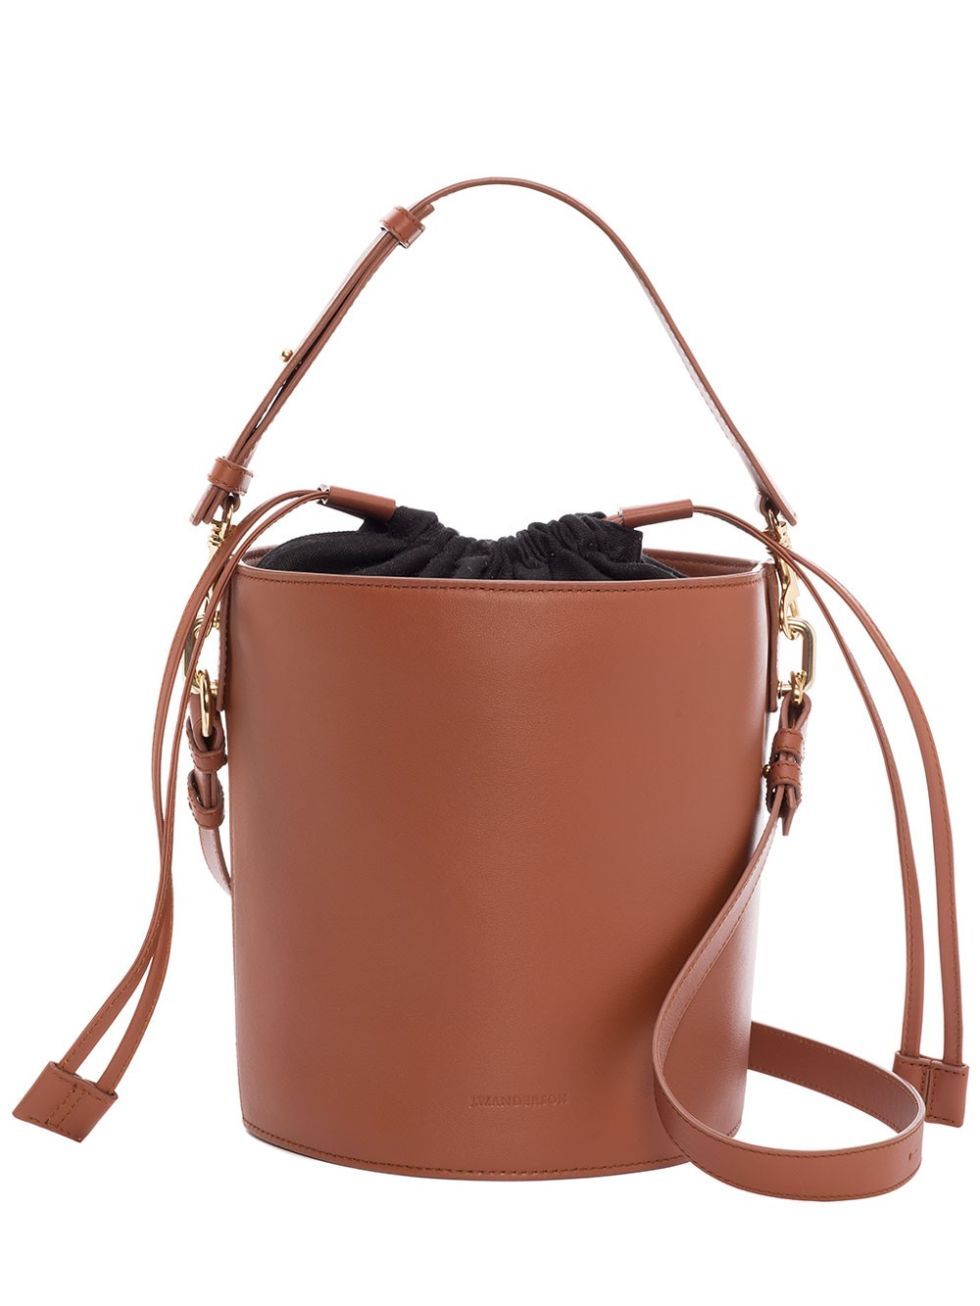 Bag, Handbag, Leather, Shoulder bag, Brown, Fashion accessory, Tan, Beige, Satchel, Luggage and bags, 